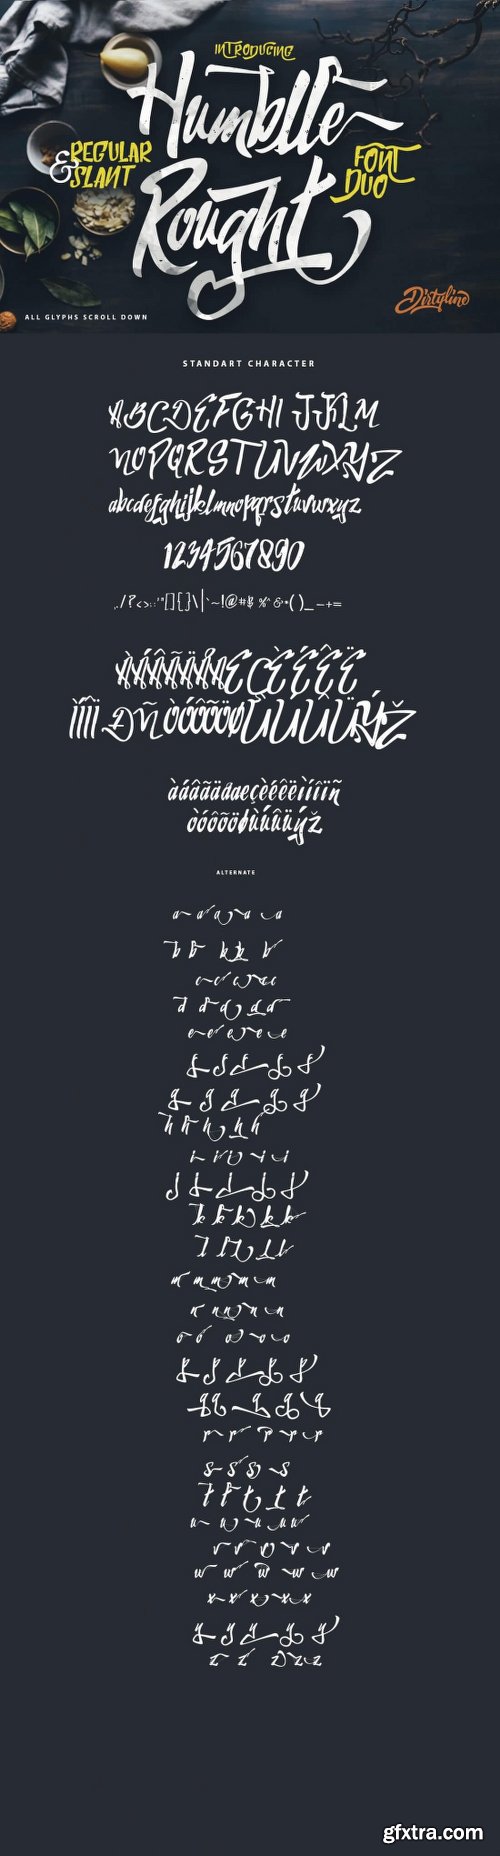 Superb Fonts Bundle of 7 Script & Display Typefaces